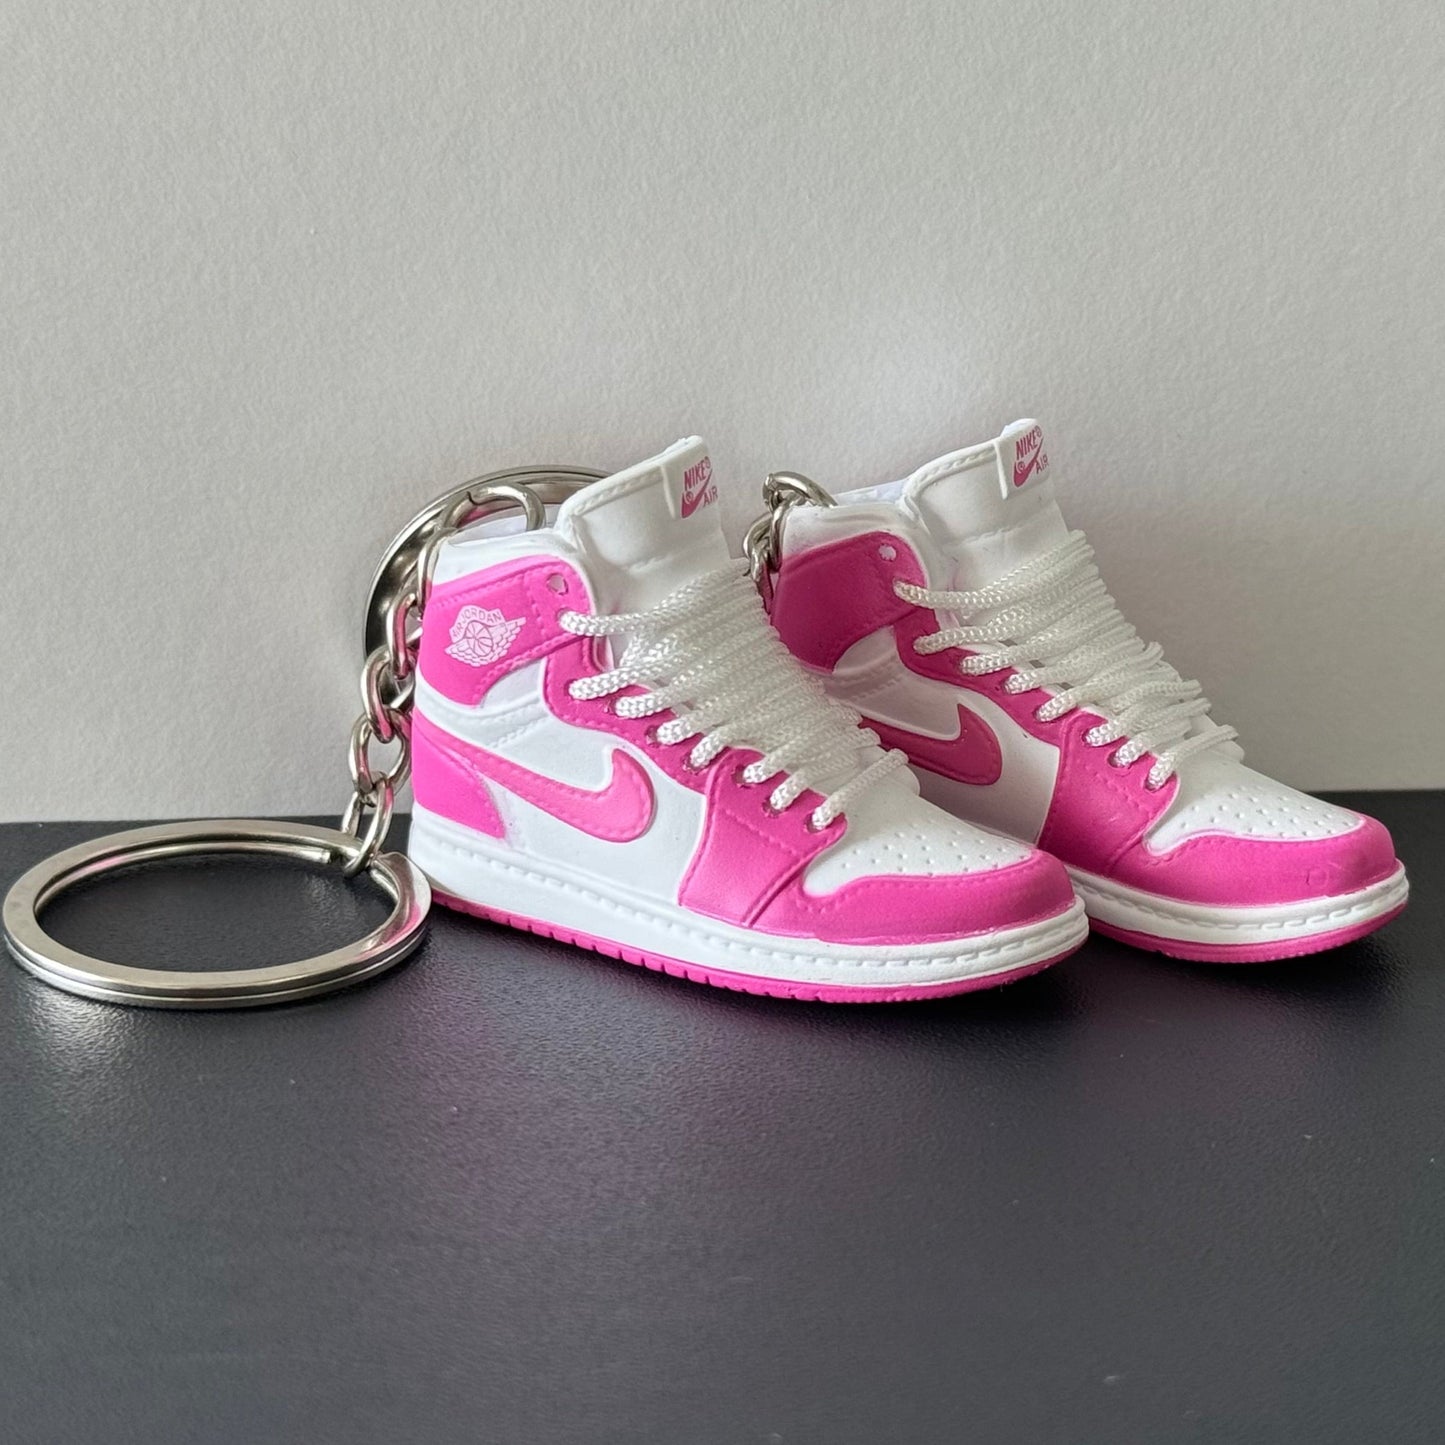 Air Jordan 1 3D Keyring - Hyper Pink